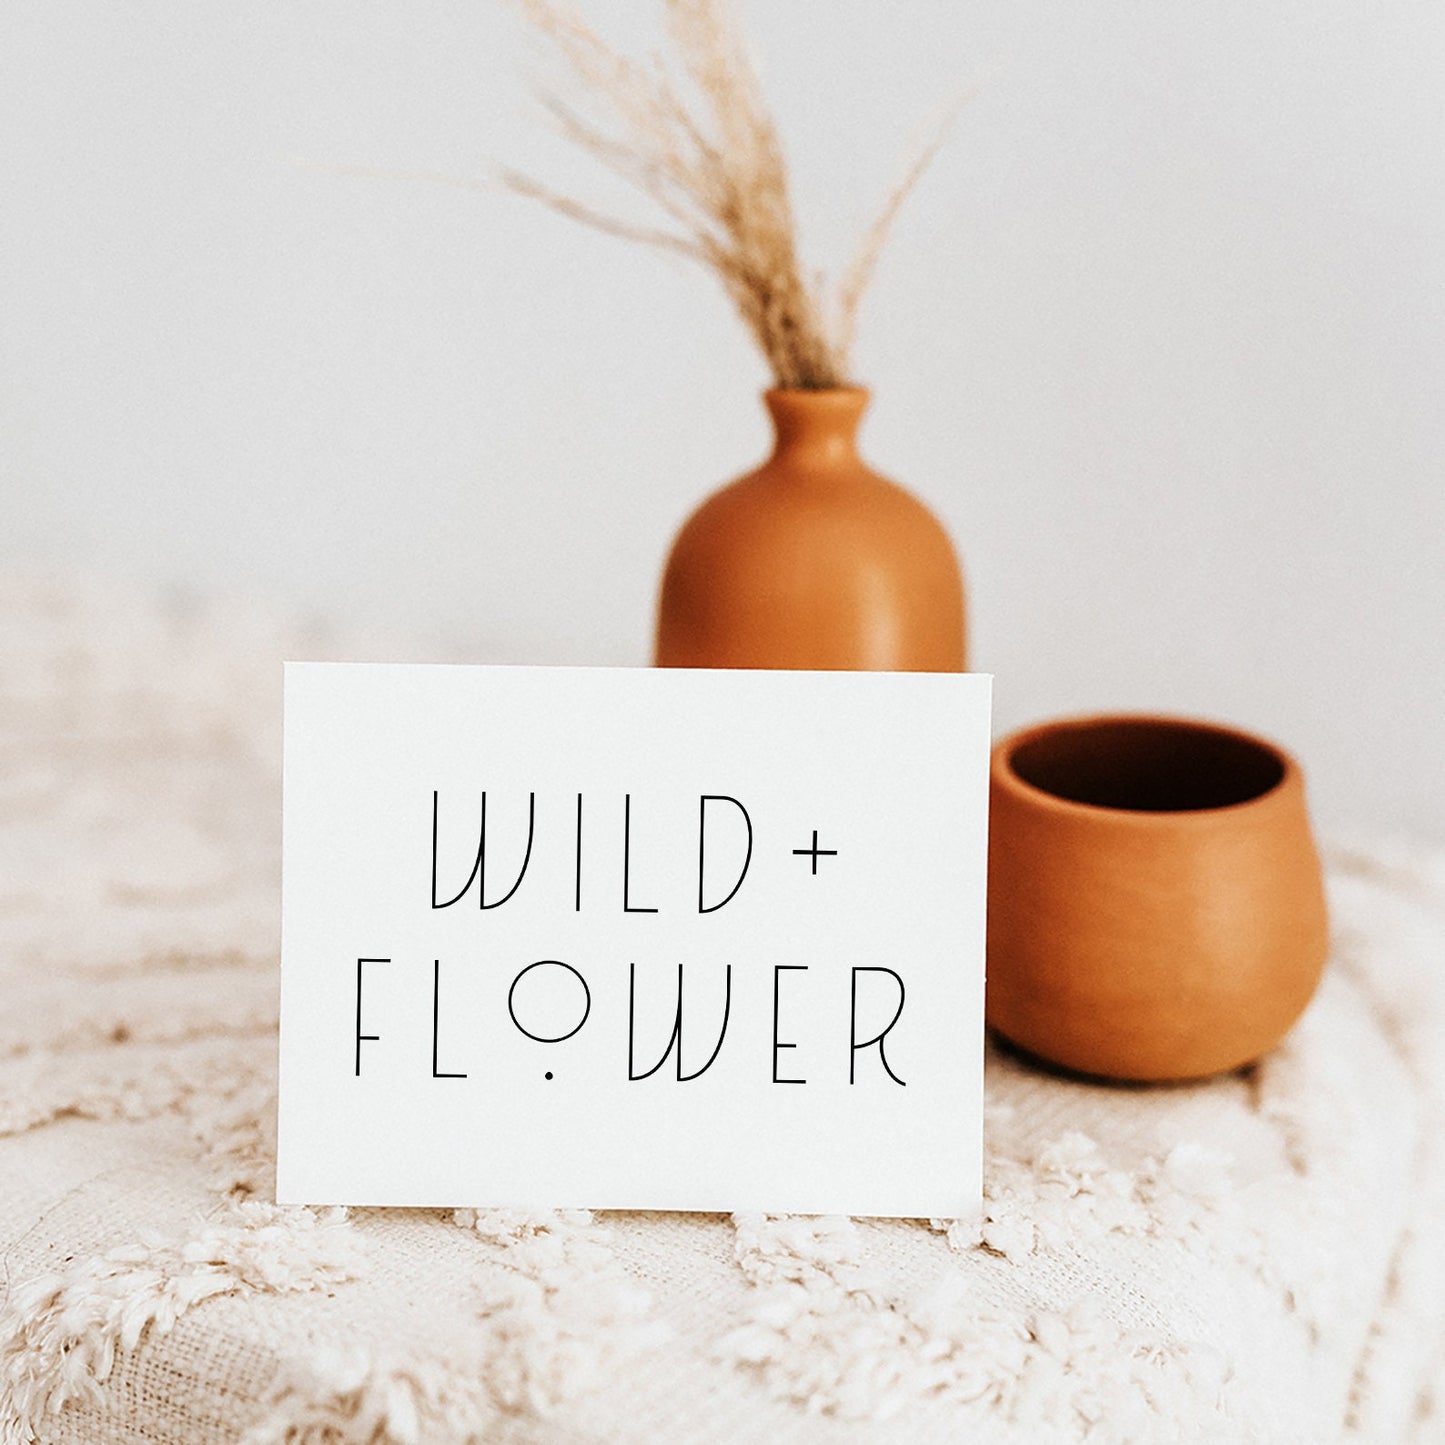 Wild + Flower | Premade Logo Design | Text Only, Modern, Bohemian, Art Deco, Boho